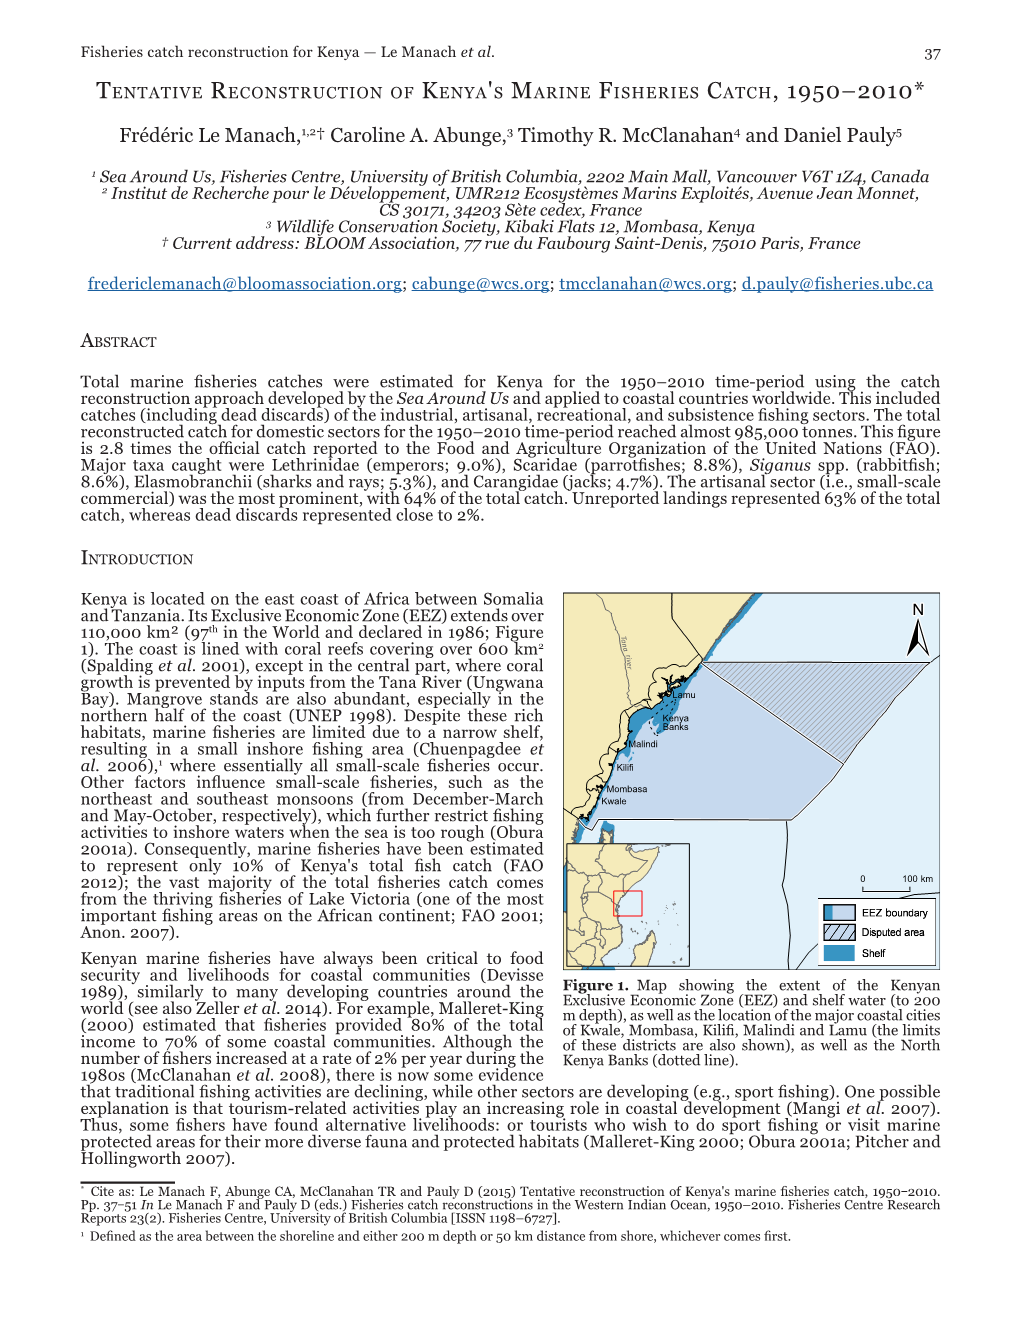 Tentative Reconstruction of Kenya's Marine Fisheries Catch, 1950–2010*